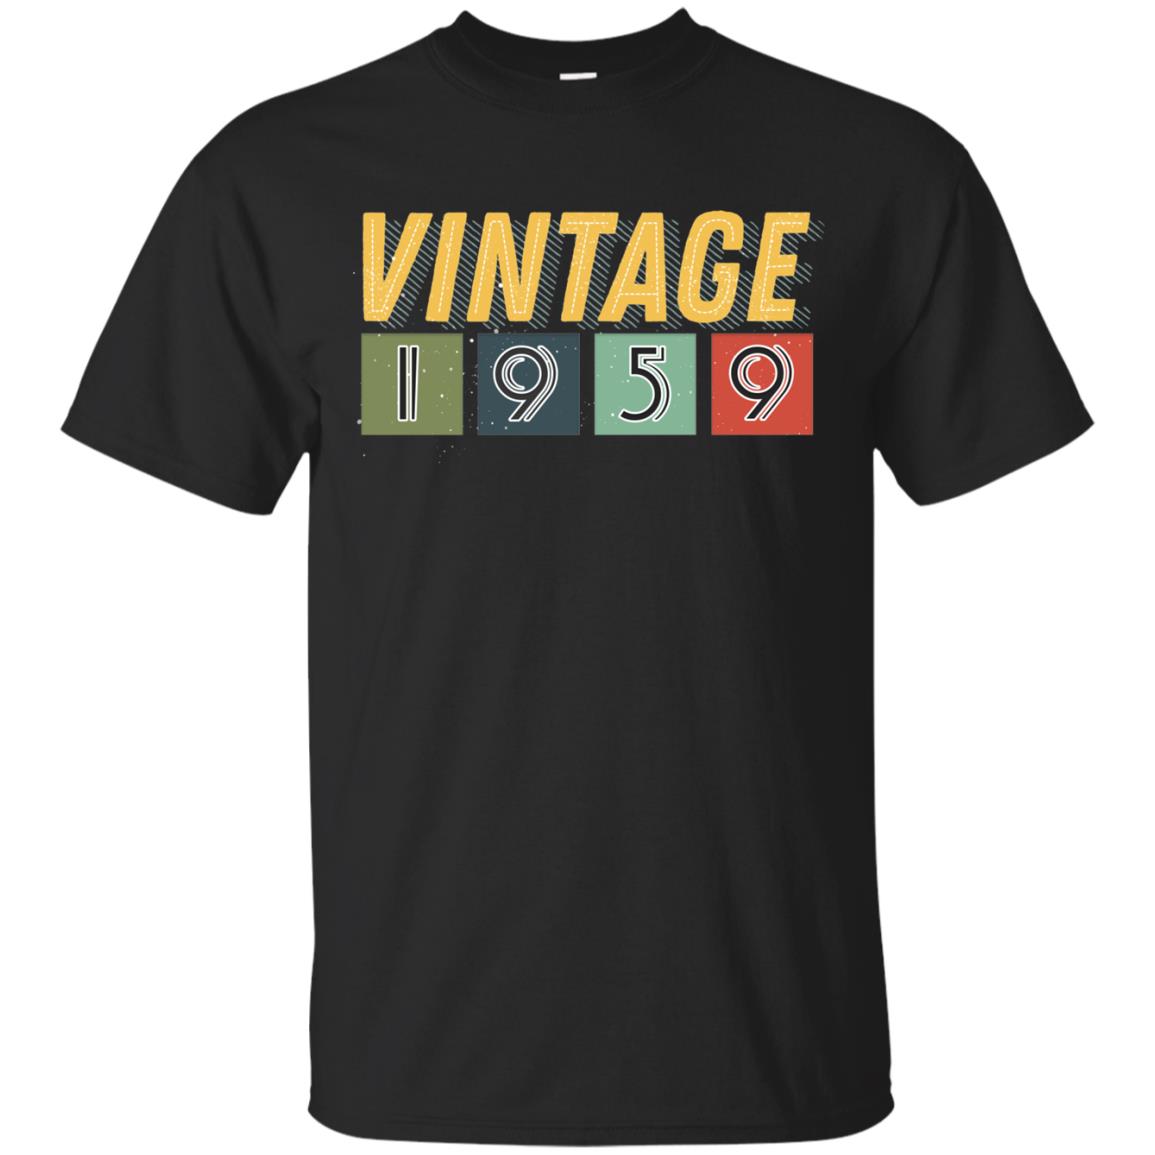 Vintage 1959 59th Birthday Gift Shirt For Mens Or WomensG200 Gildan Ultra Cotton T-Shirt